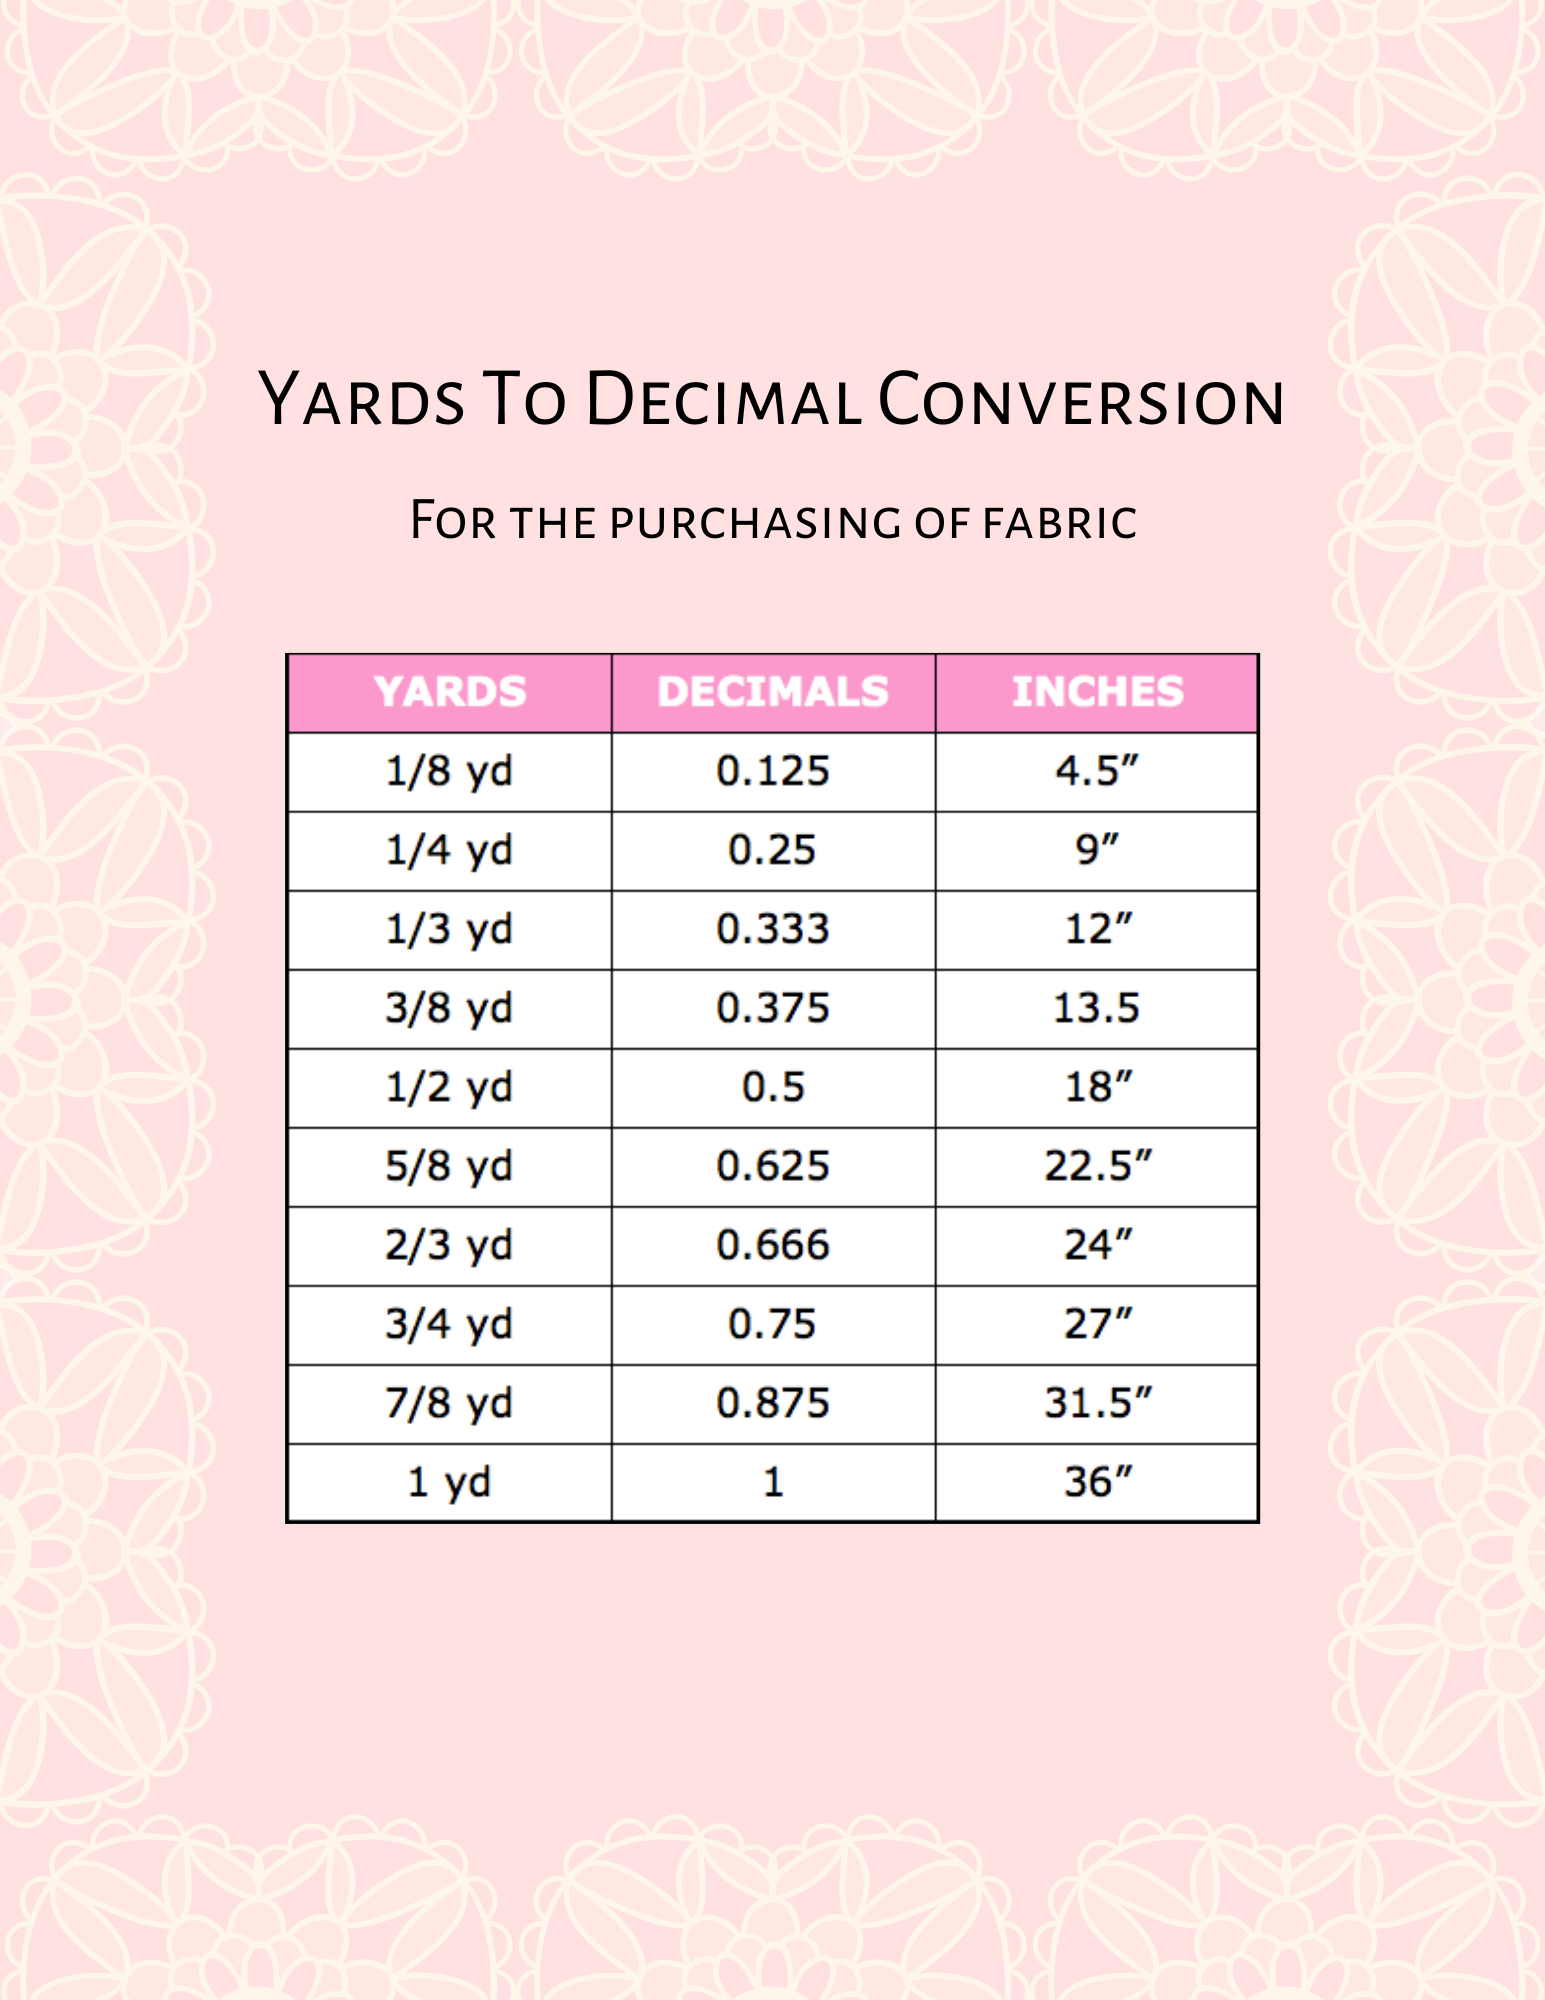 yards-to-decimal-conversion